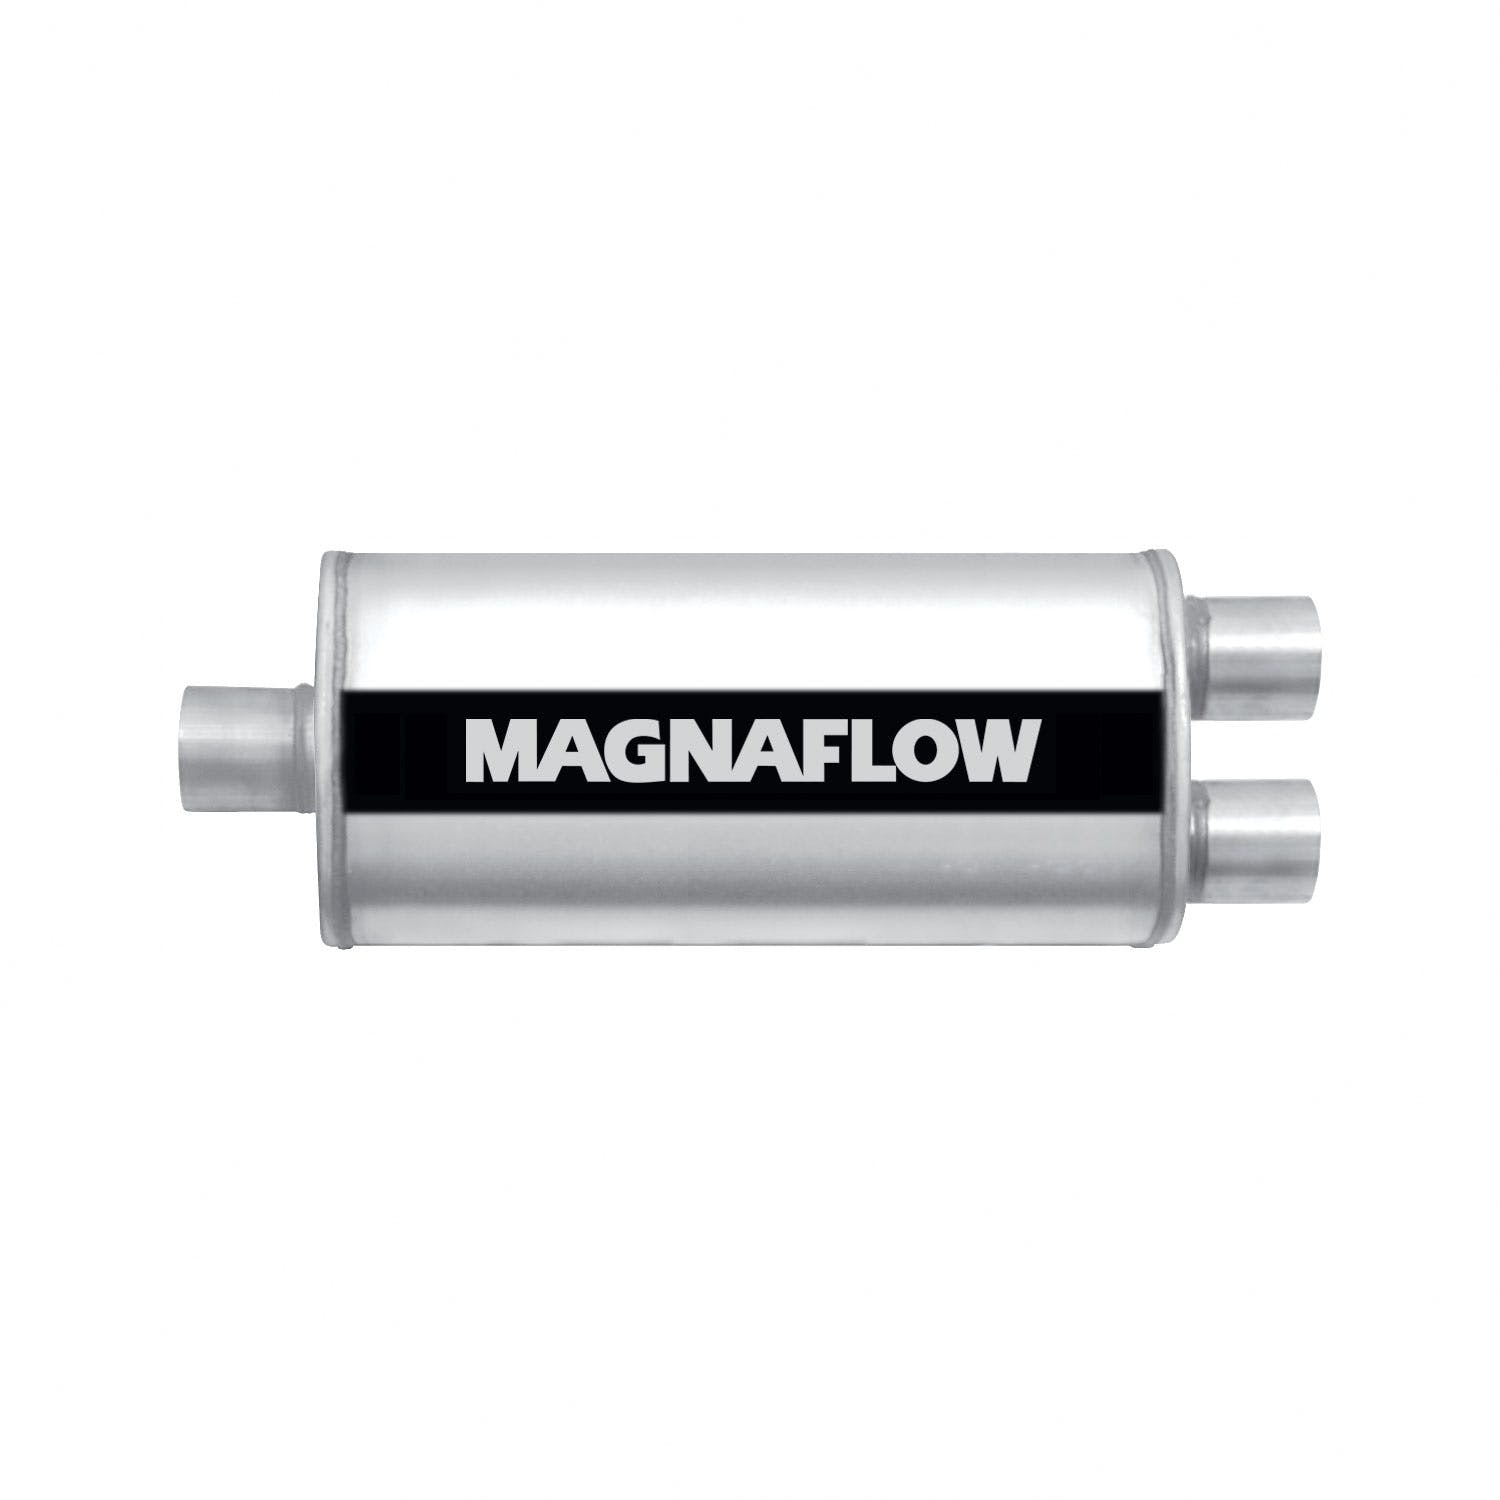 MagnaFlow Exhaust Products 12258 Universal Muffler